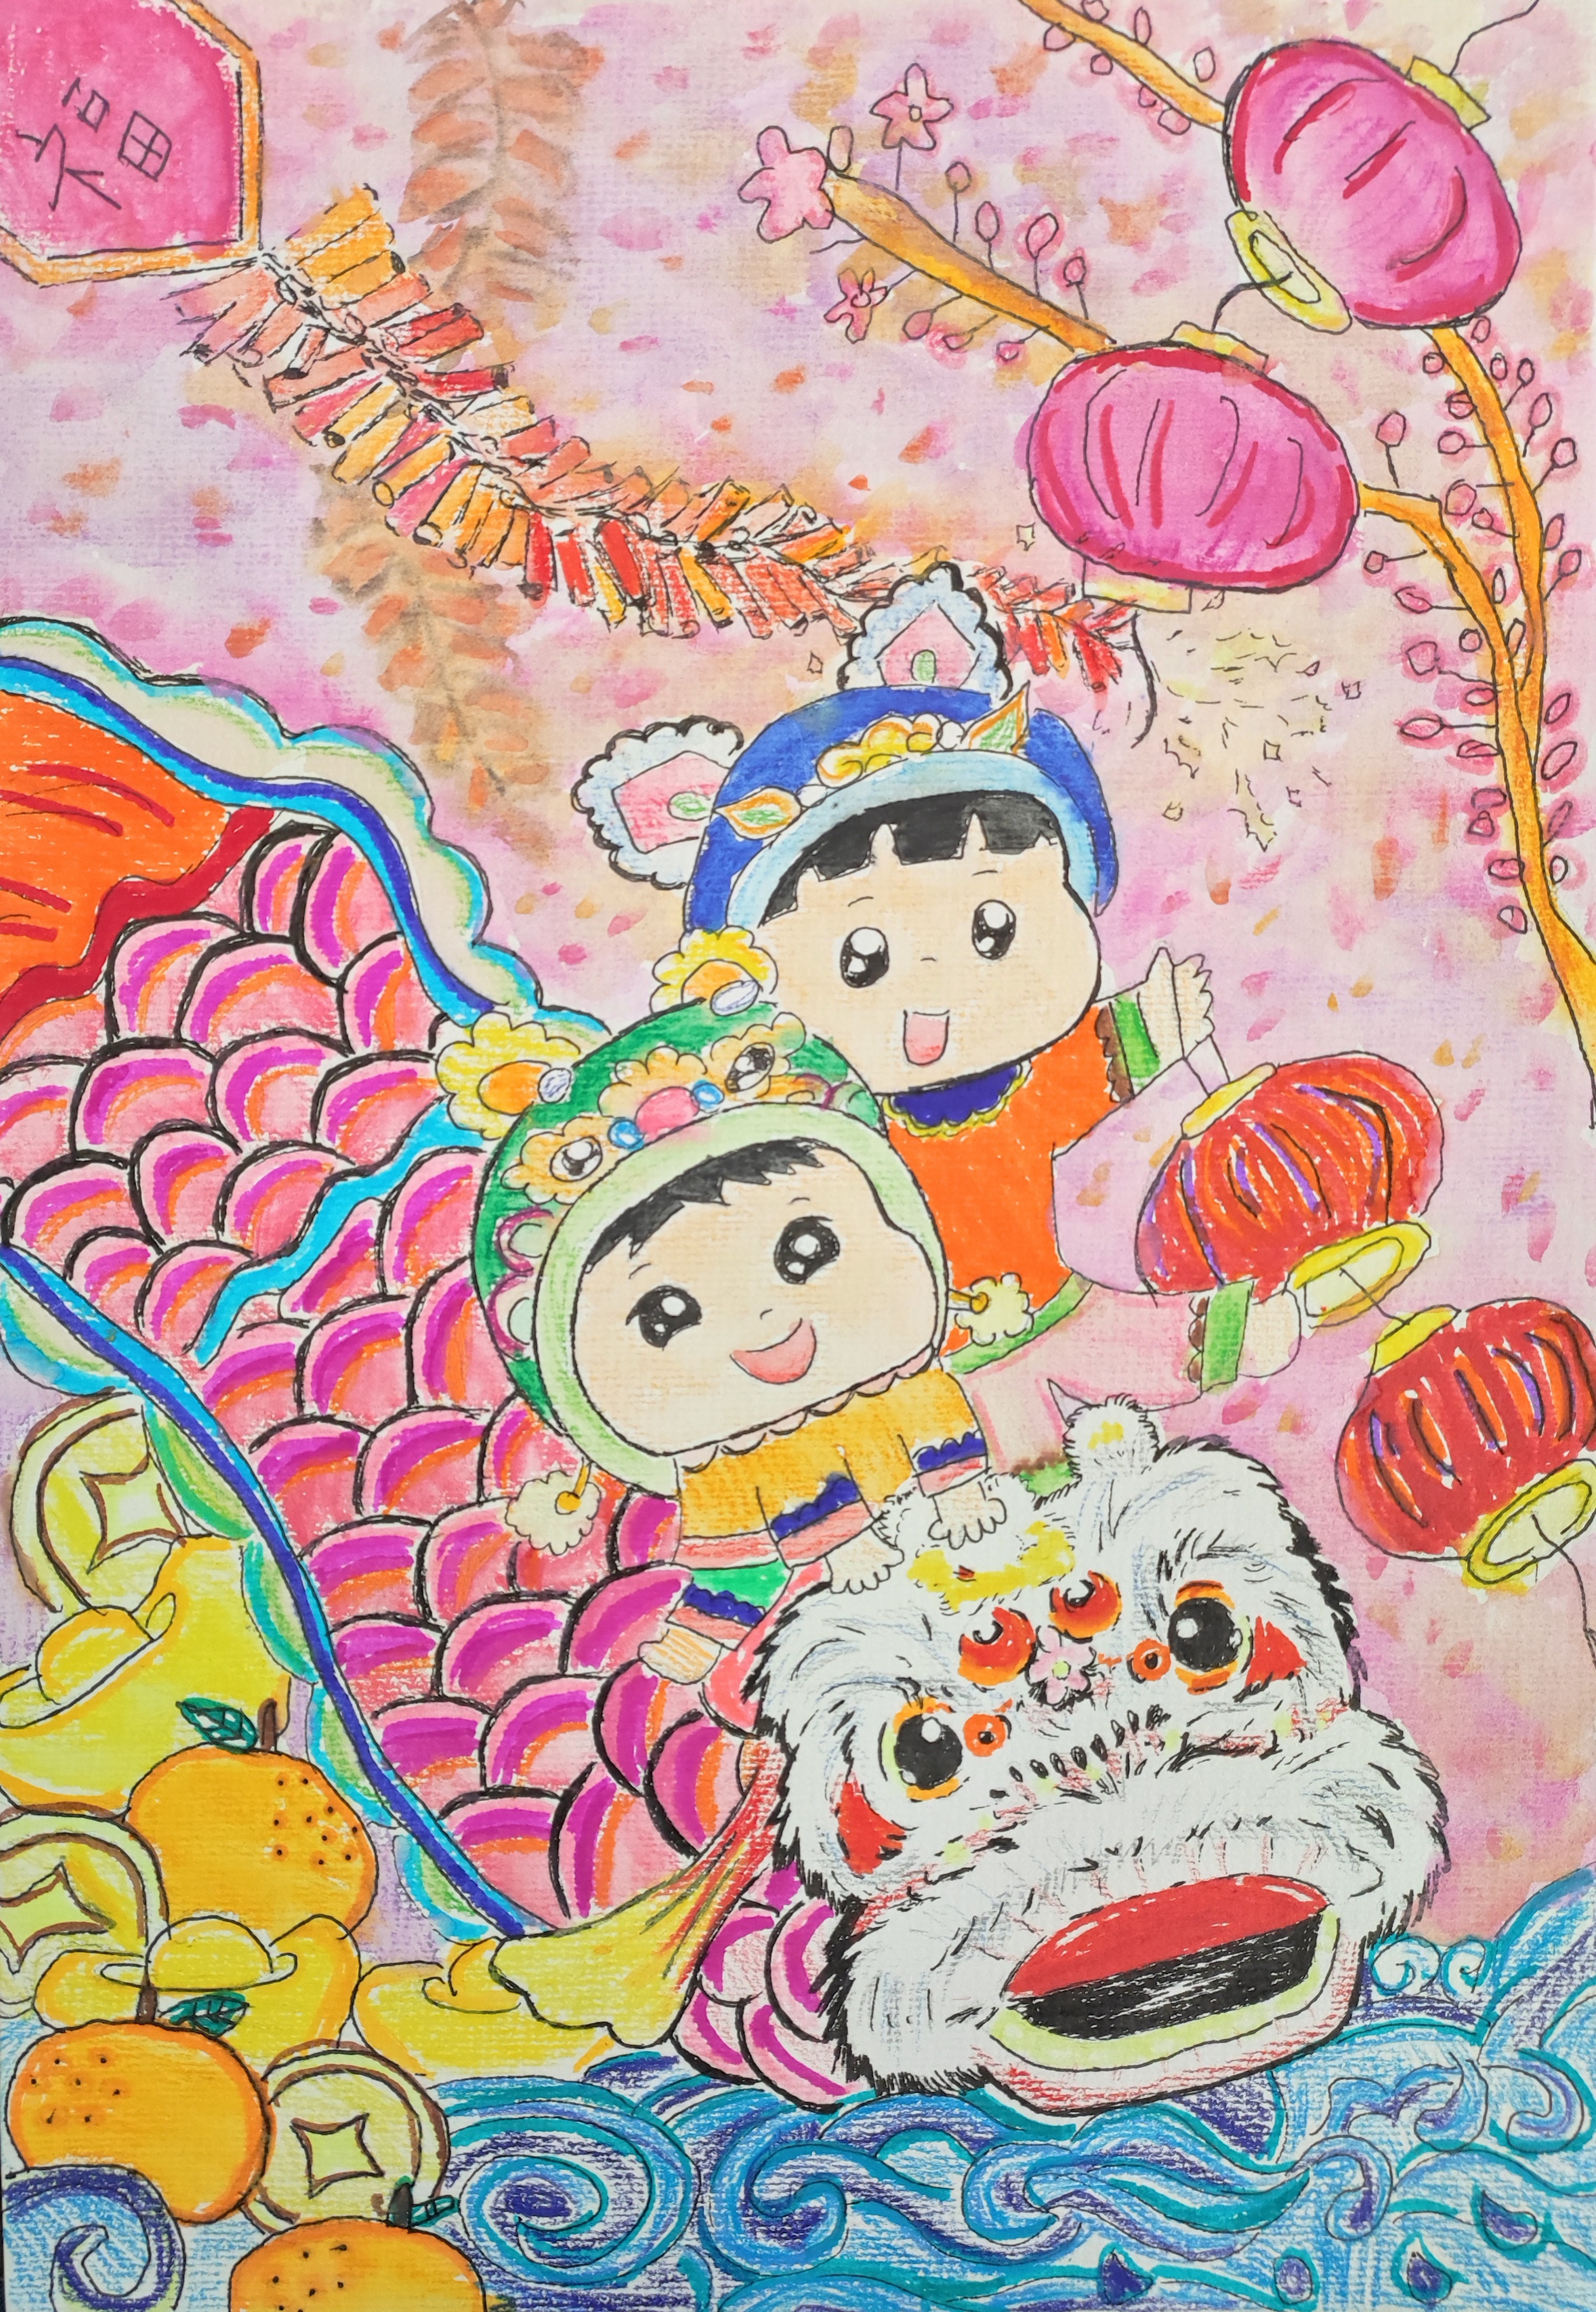 <div>熱鬧新年-初小組-亞軍-吳禹逸</div>
<div>作品中兩小孩坐着舞獅在空中飛翔的構圖極具動感，角色的頭飾設計十分可愛，整體用色簡潔令讀者看落很舒服。</div>